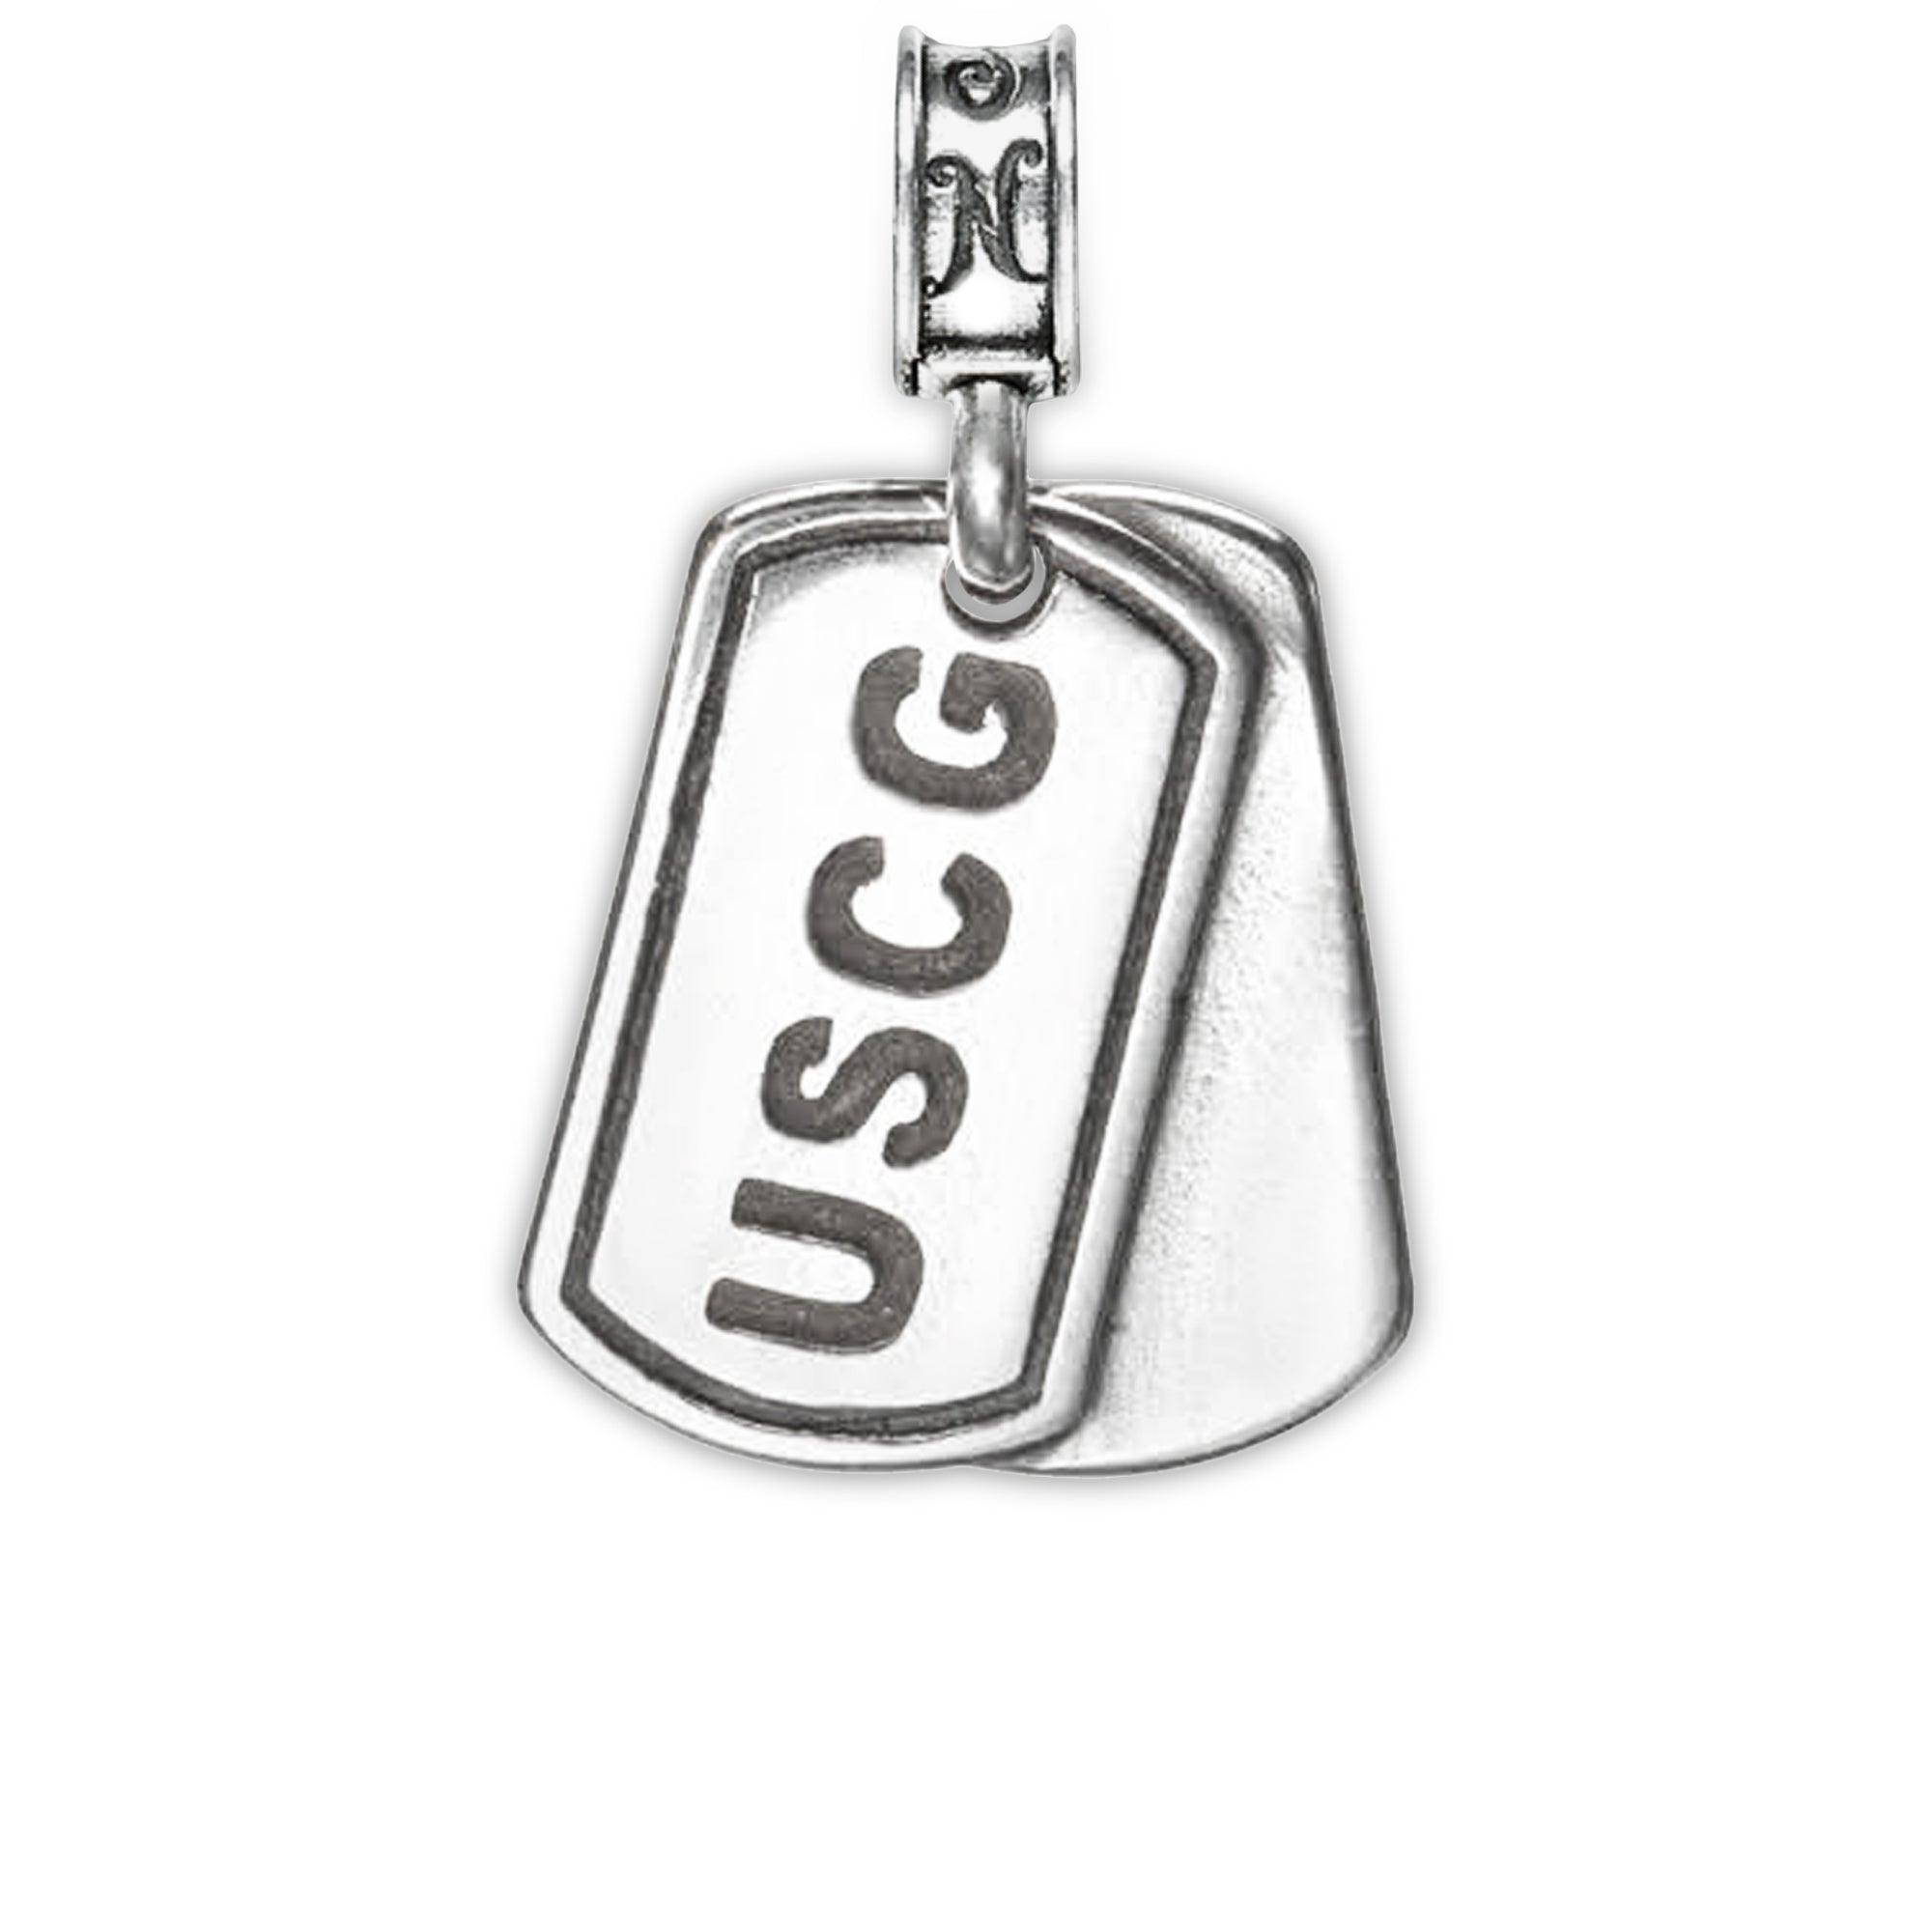 Military Jewelry, Military Charms, Military Gifts, United States Coast Guard, USCG, Coast Guard Dog Tag